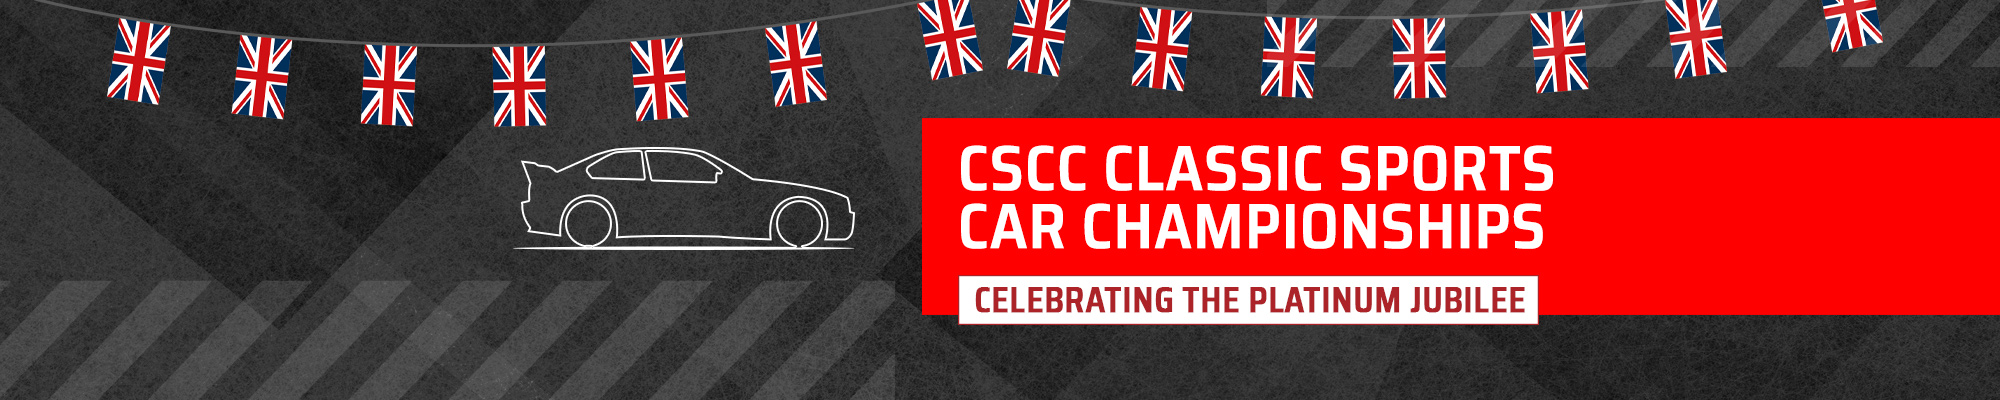 CSCC Classic Sports Car Championships